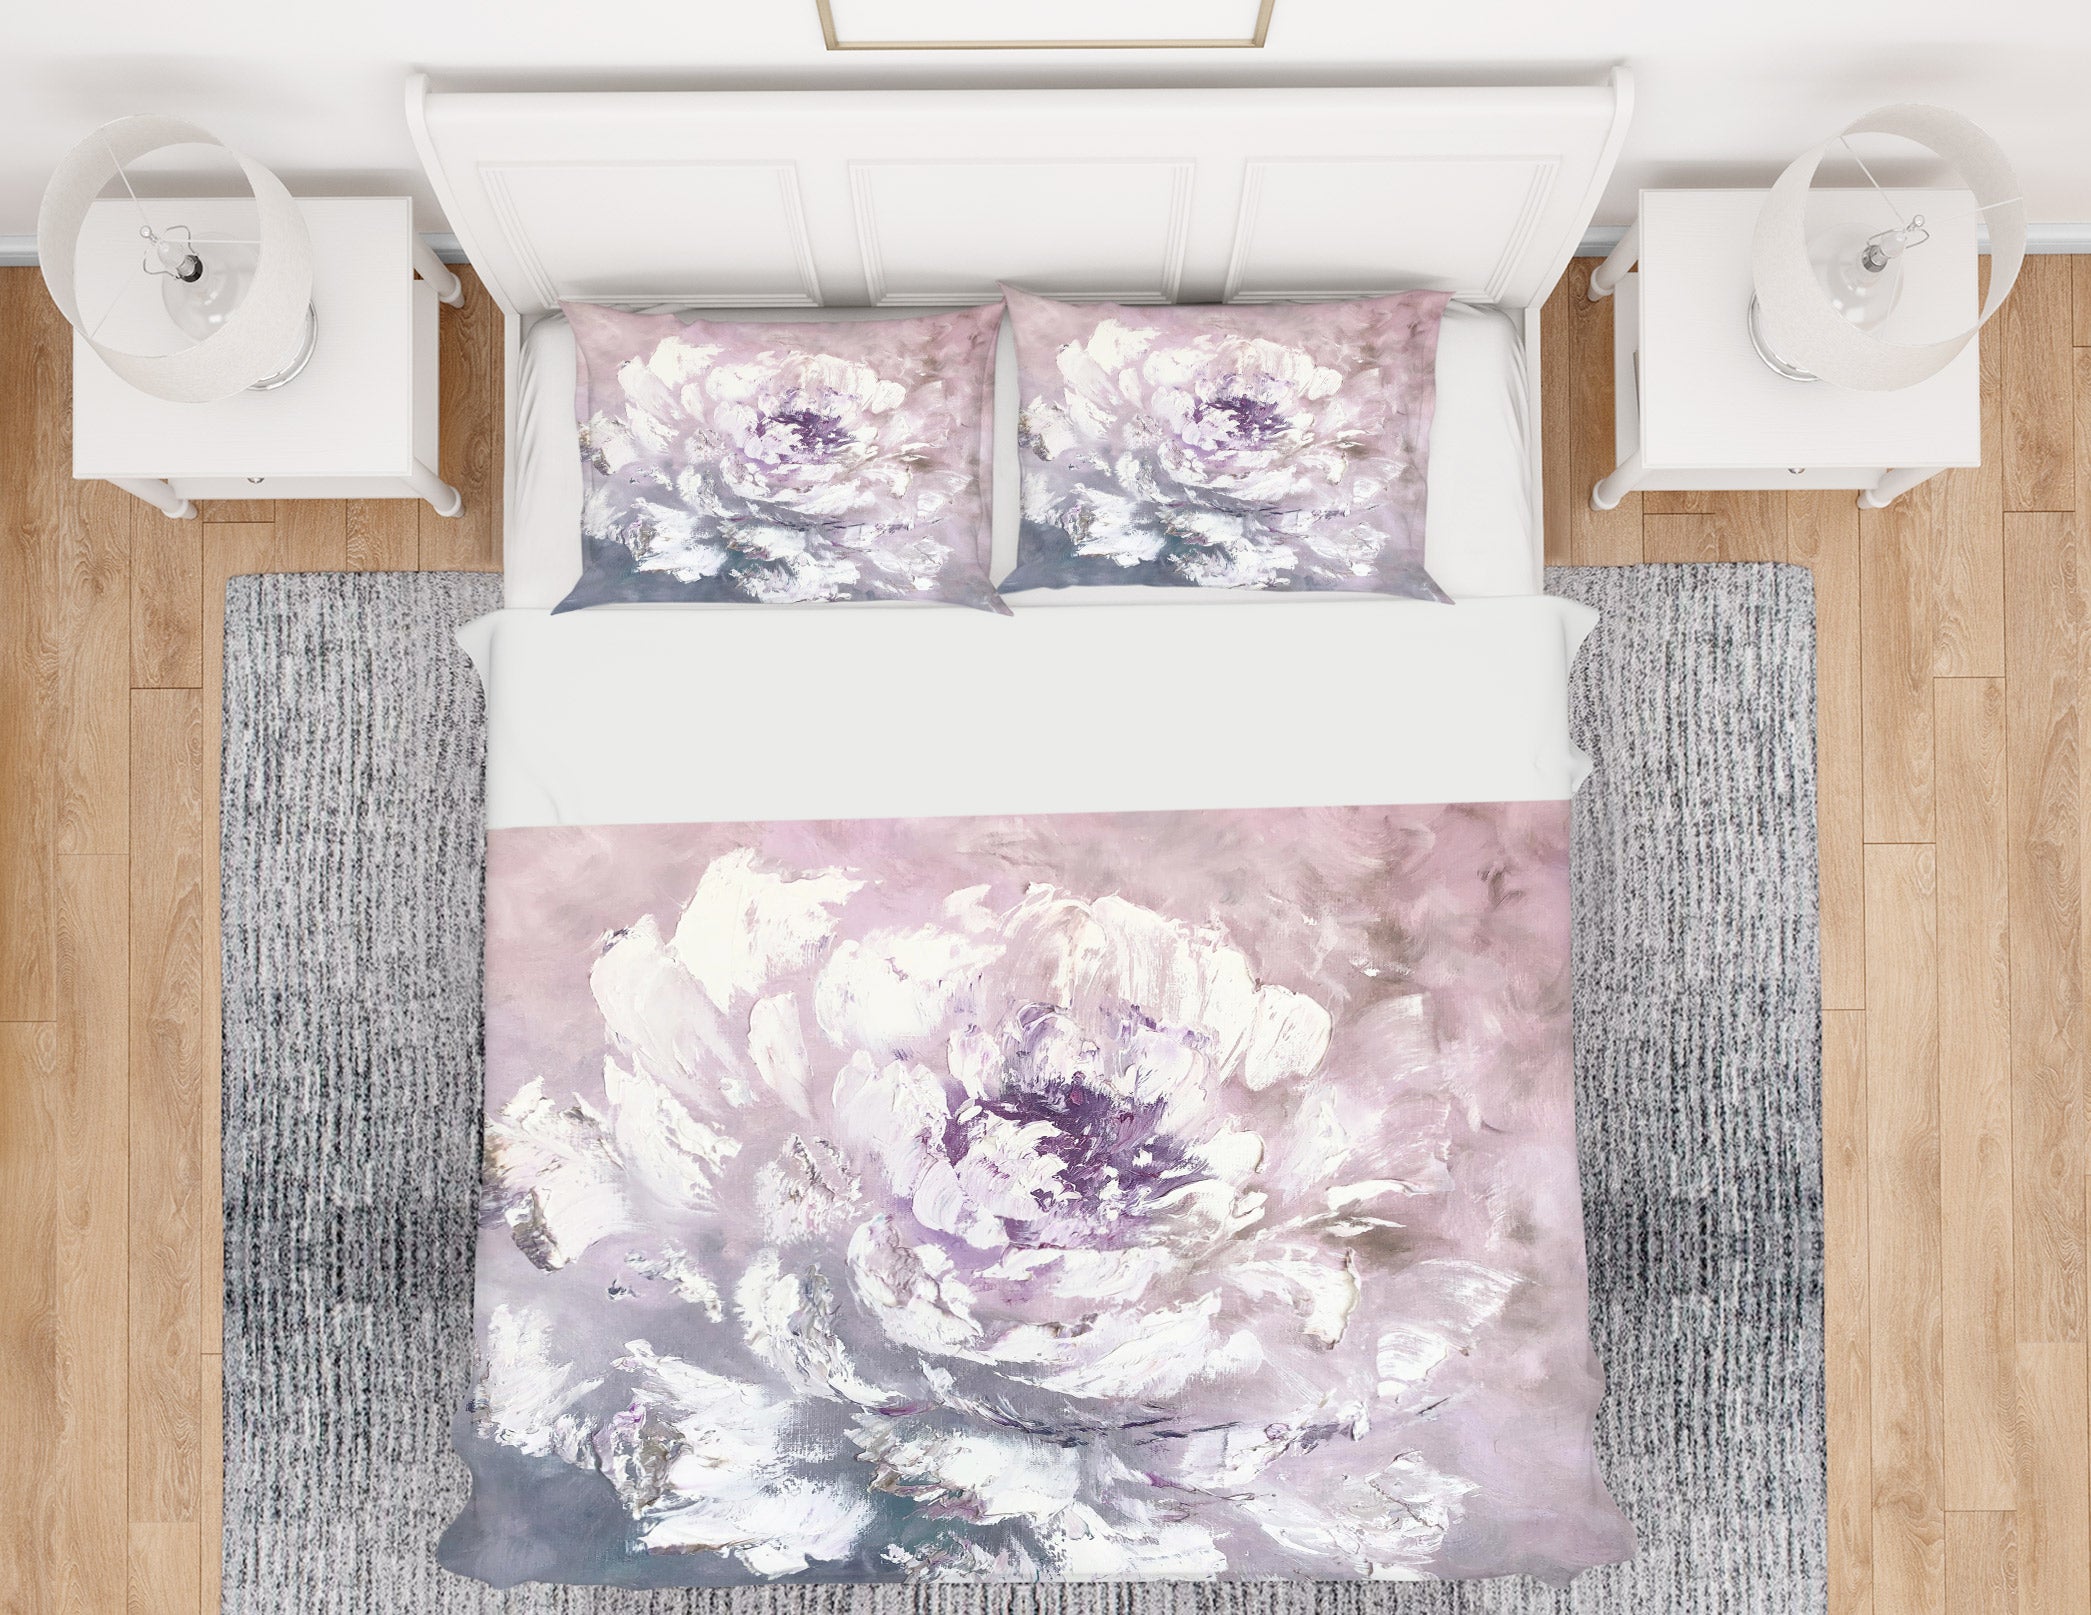 3D Watercolor Flowers 458 Skromova Marina Bedding Bed Pillowcases Quilt